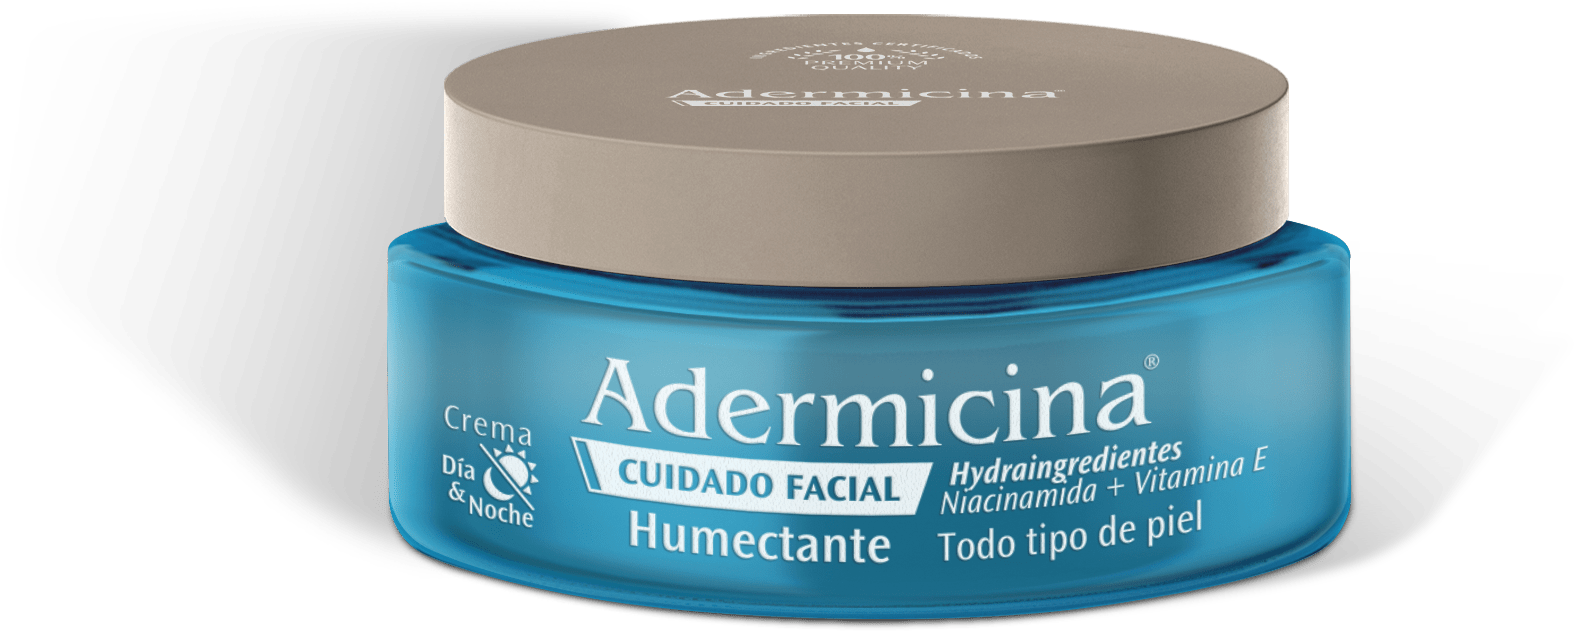 Adermicina-Banner-linea-Cuidado-Facial-Humectante